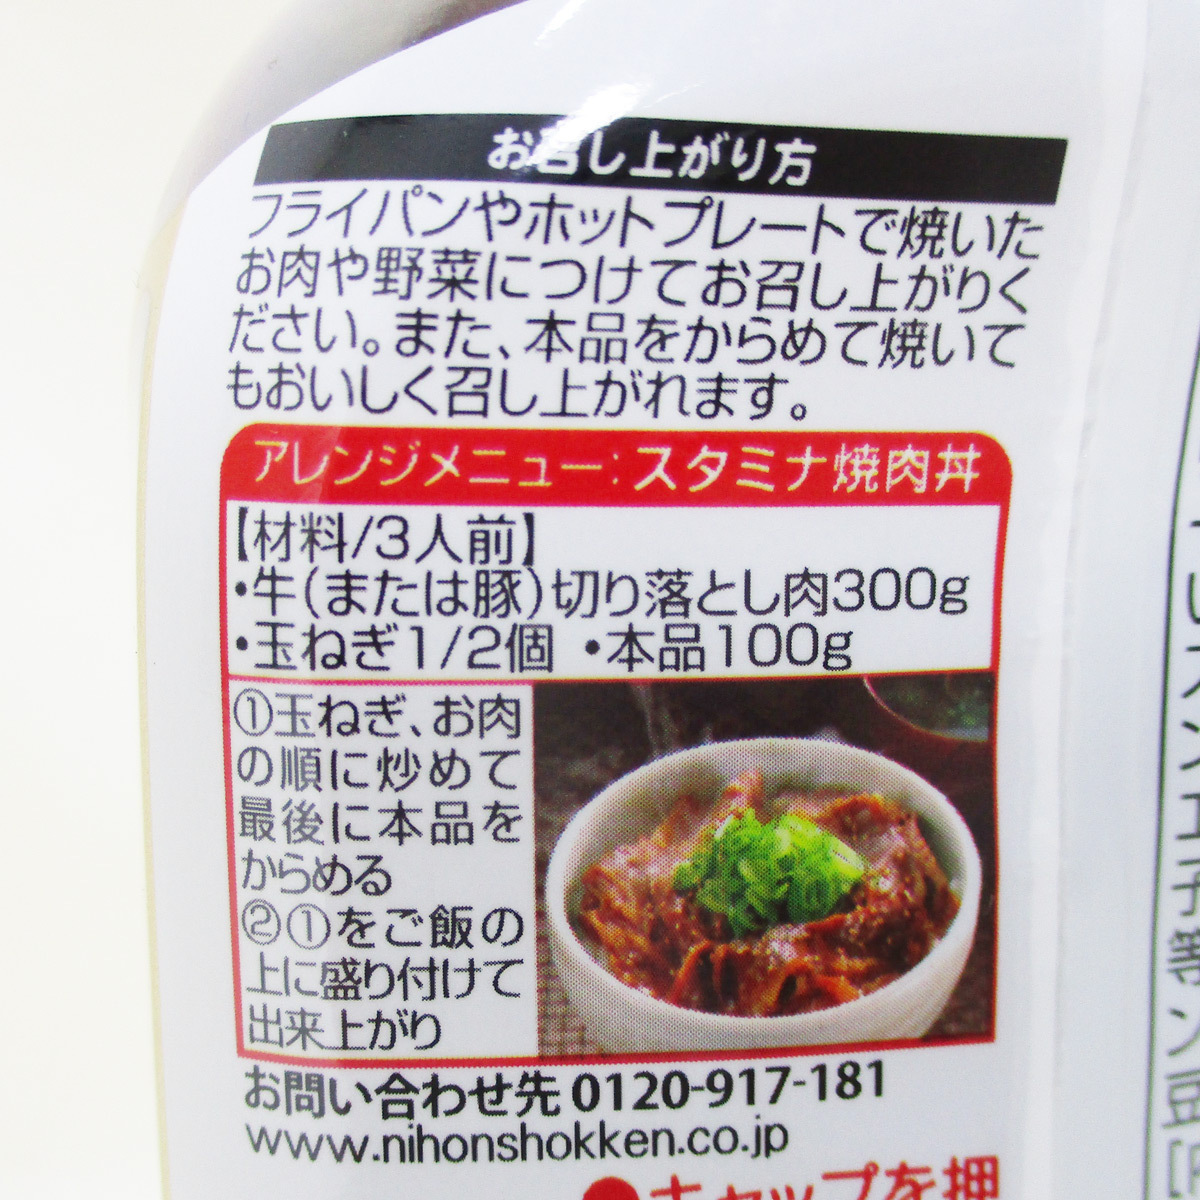  free shipping yakiniku. sause .. garlic .. pavilion Japan meal ./4274 210gx10 pcs set /. cash on delivery service un- possible goods 